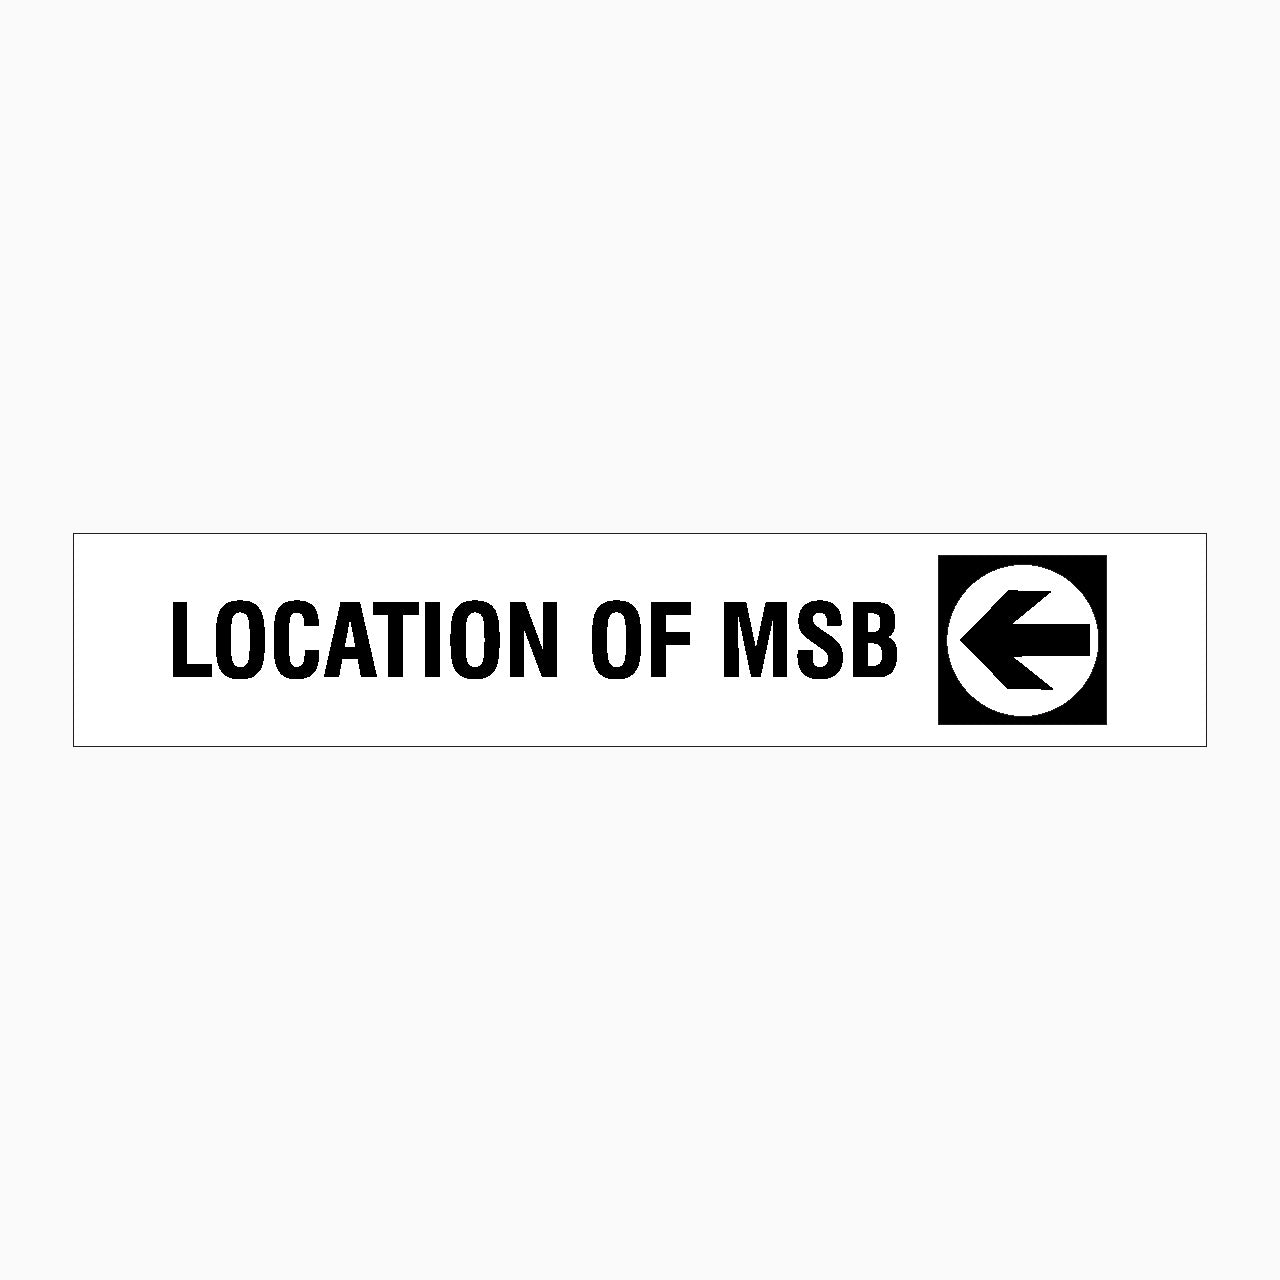 LOCATION OF MSB - LEFT ARROW SIGN